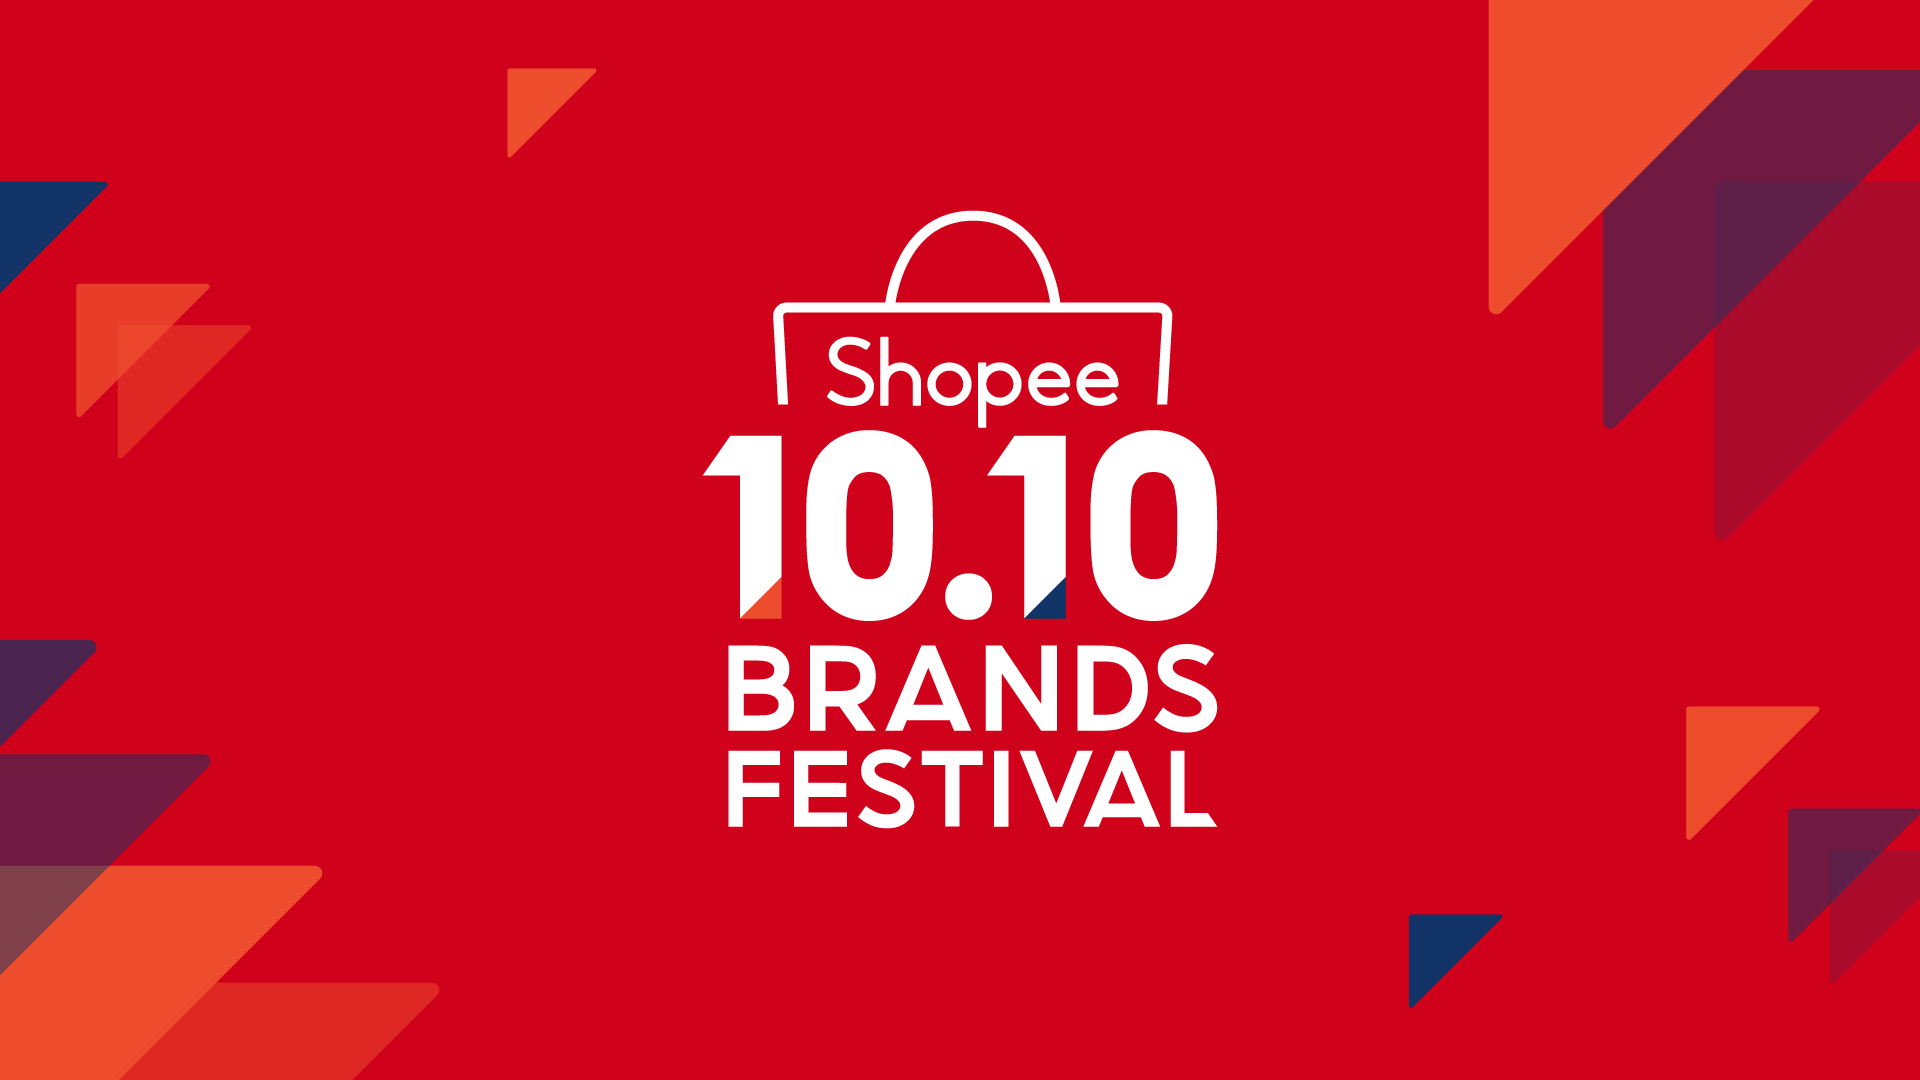 Shopee 10.10 Brands Festival 2021  ร้าน PPKIDSHOP ของใช้ ของแล่น แม่และเด็ก ยกแบรนด์ดังชั้นนำ มาลดแบบสุดปัง! 